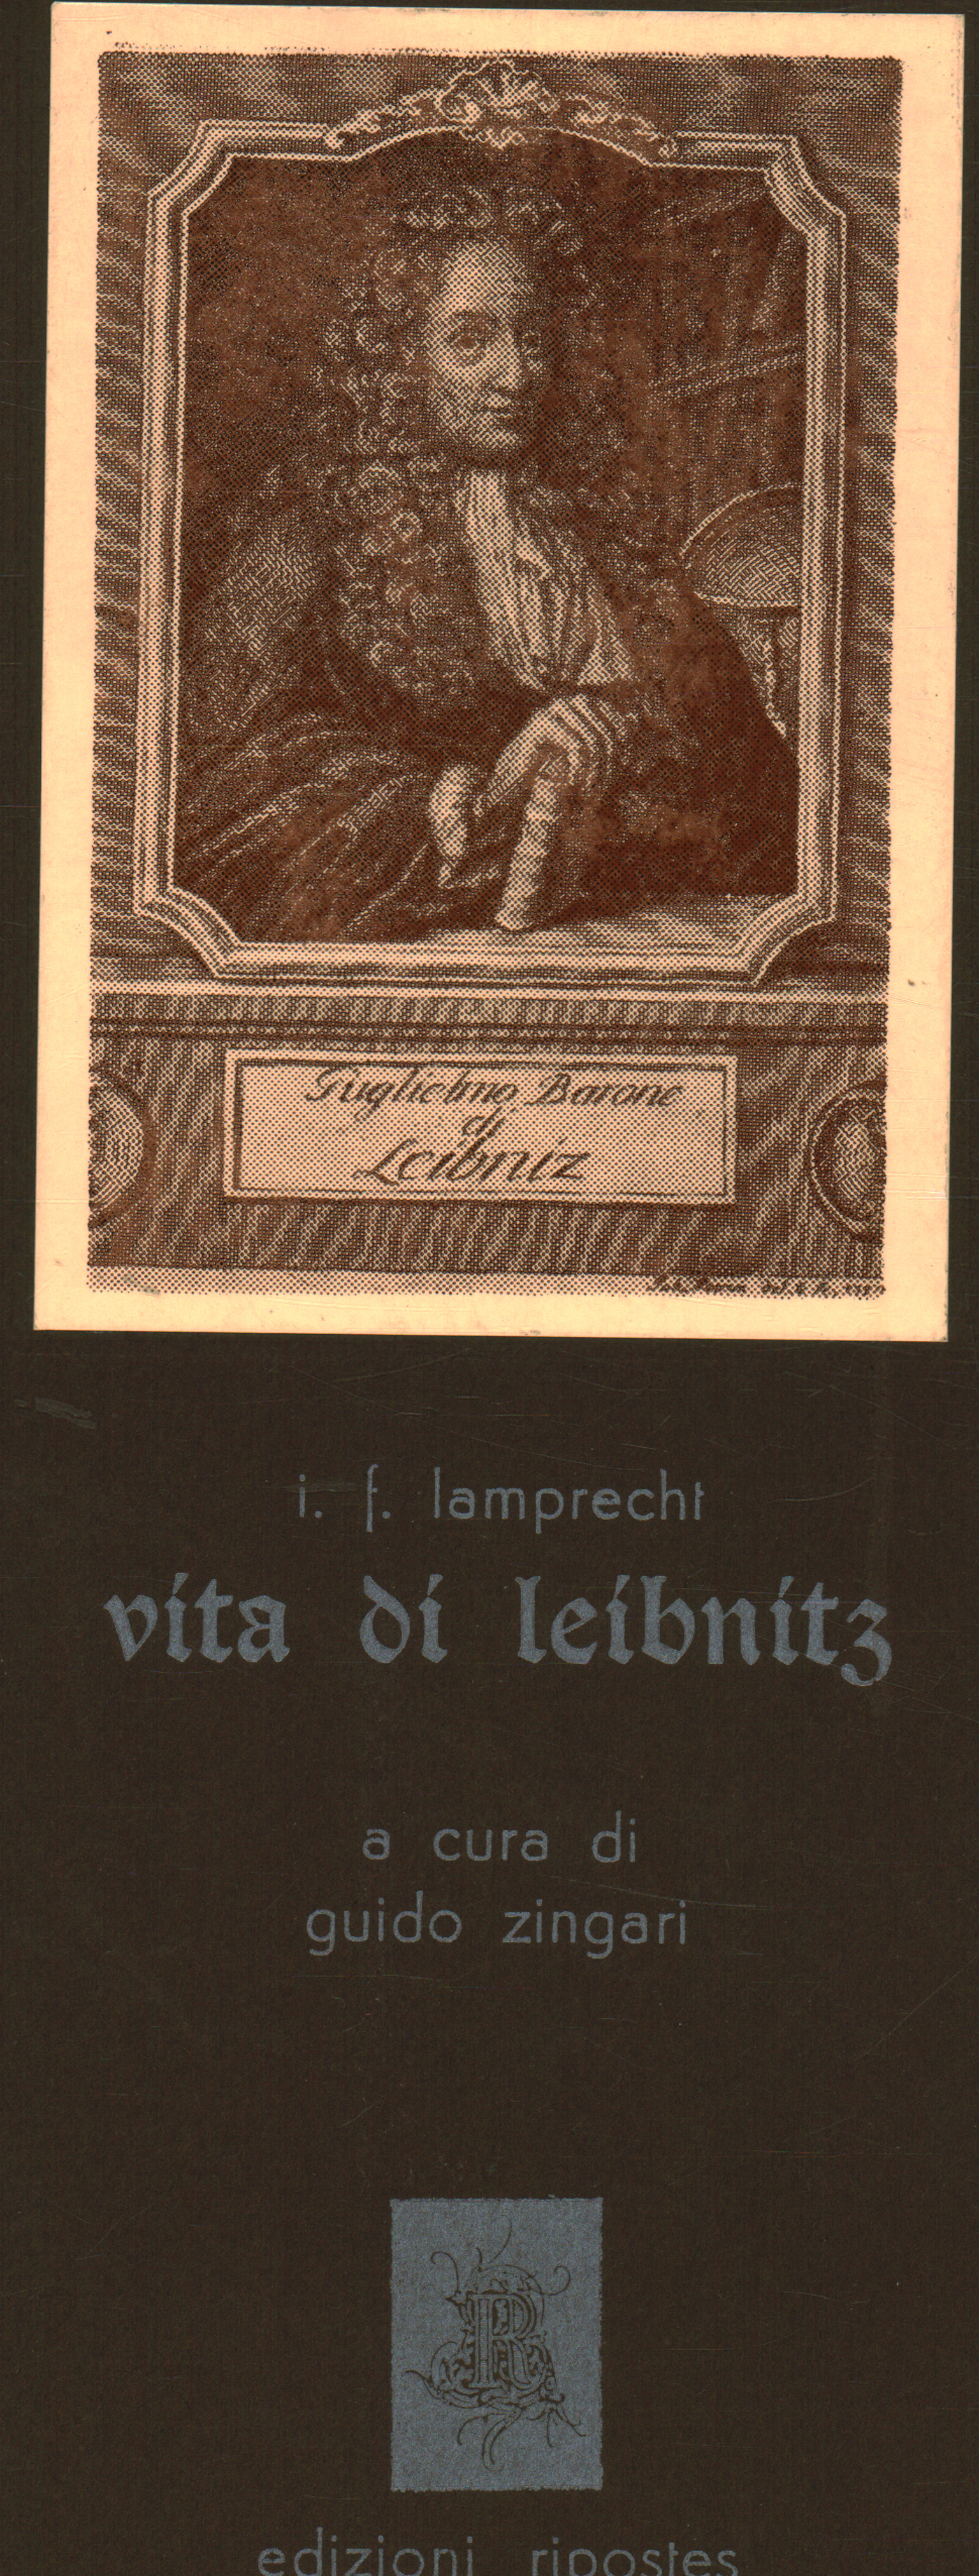 Vita di Leibnitz, I. F. Lamprecht